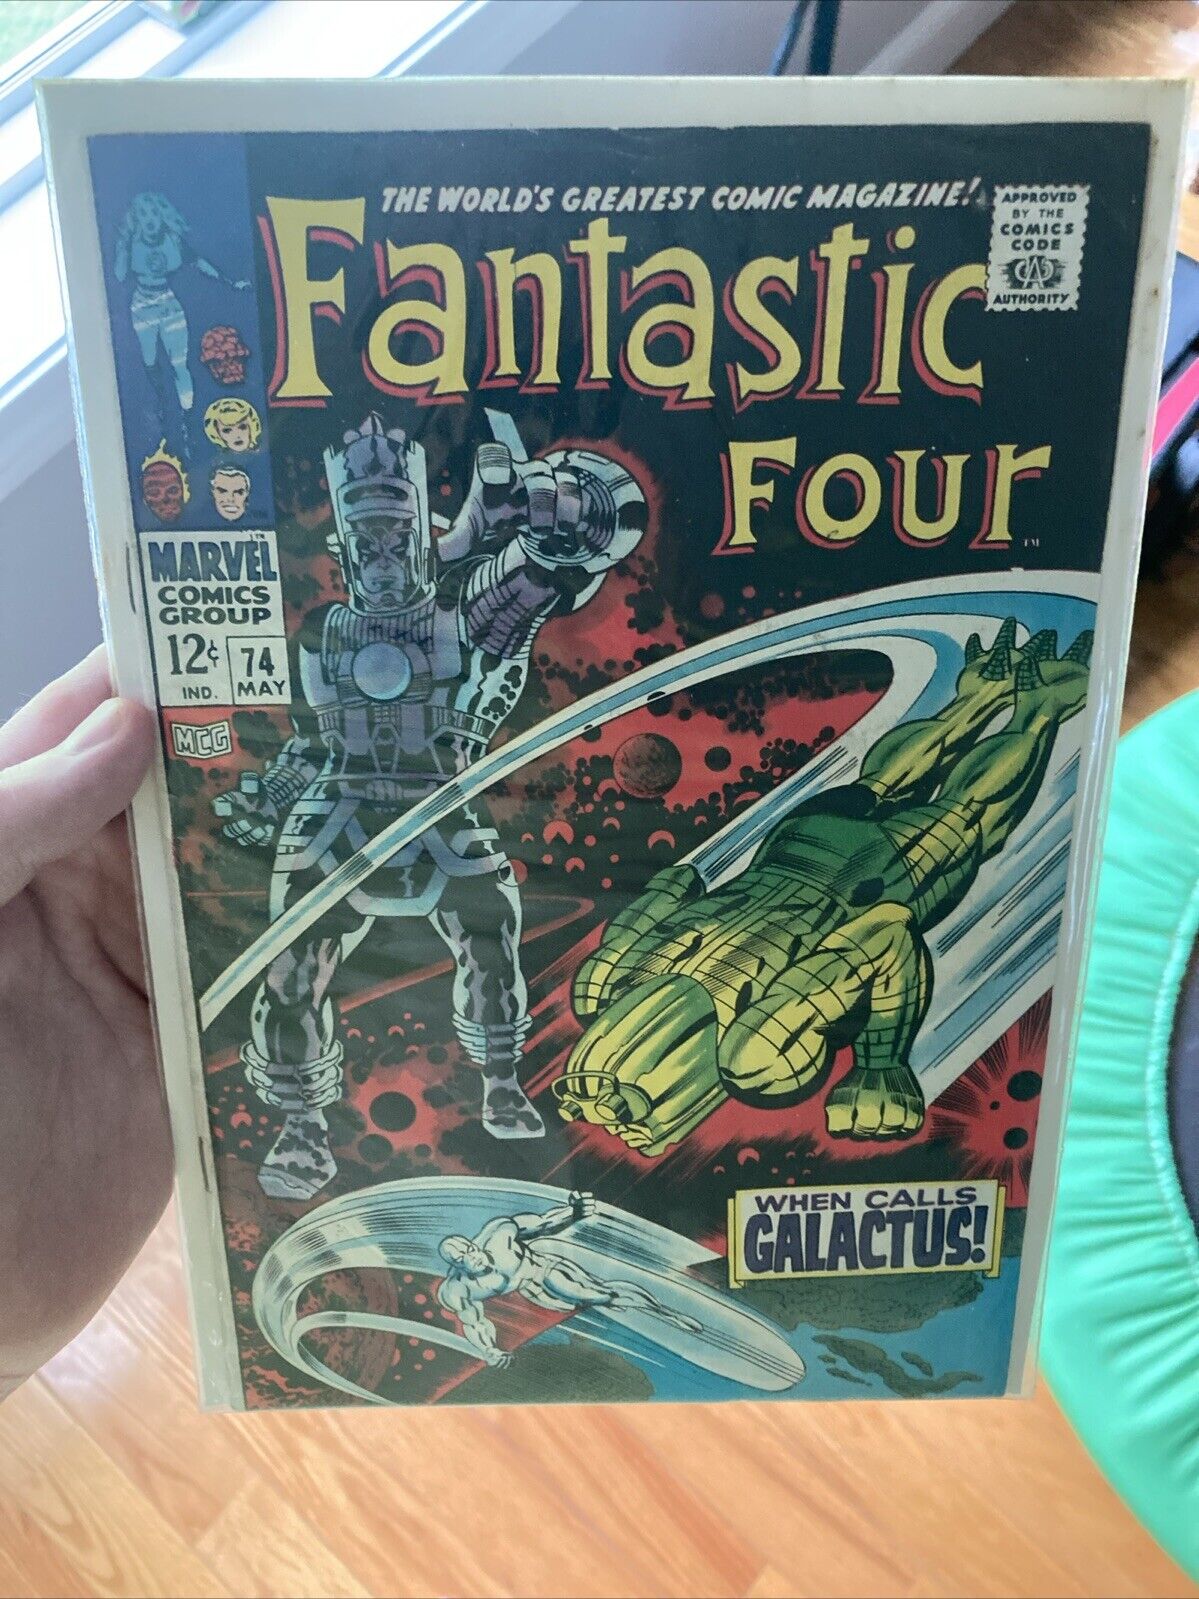 FANTASTIC FOUR COMIC BOOK, Volume 1 Number #74 (Marvel May 1968). Rare Classic